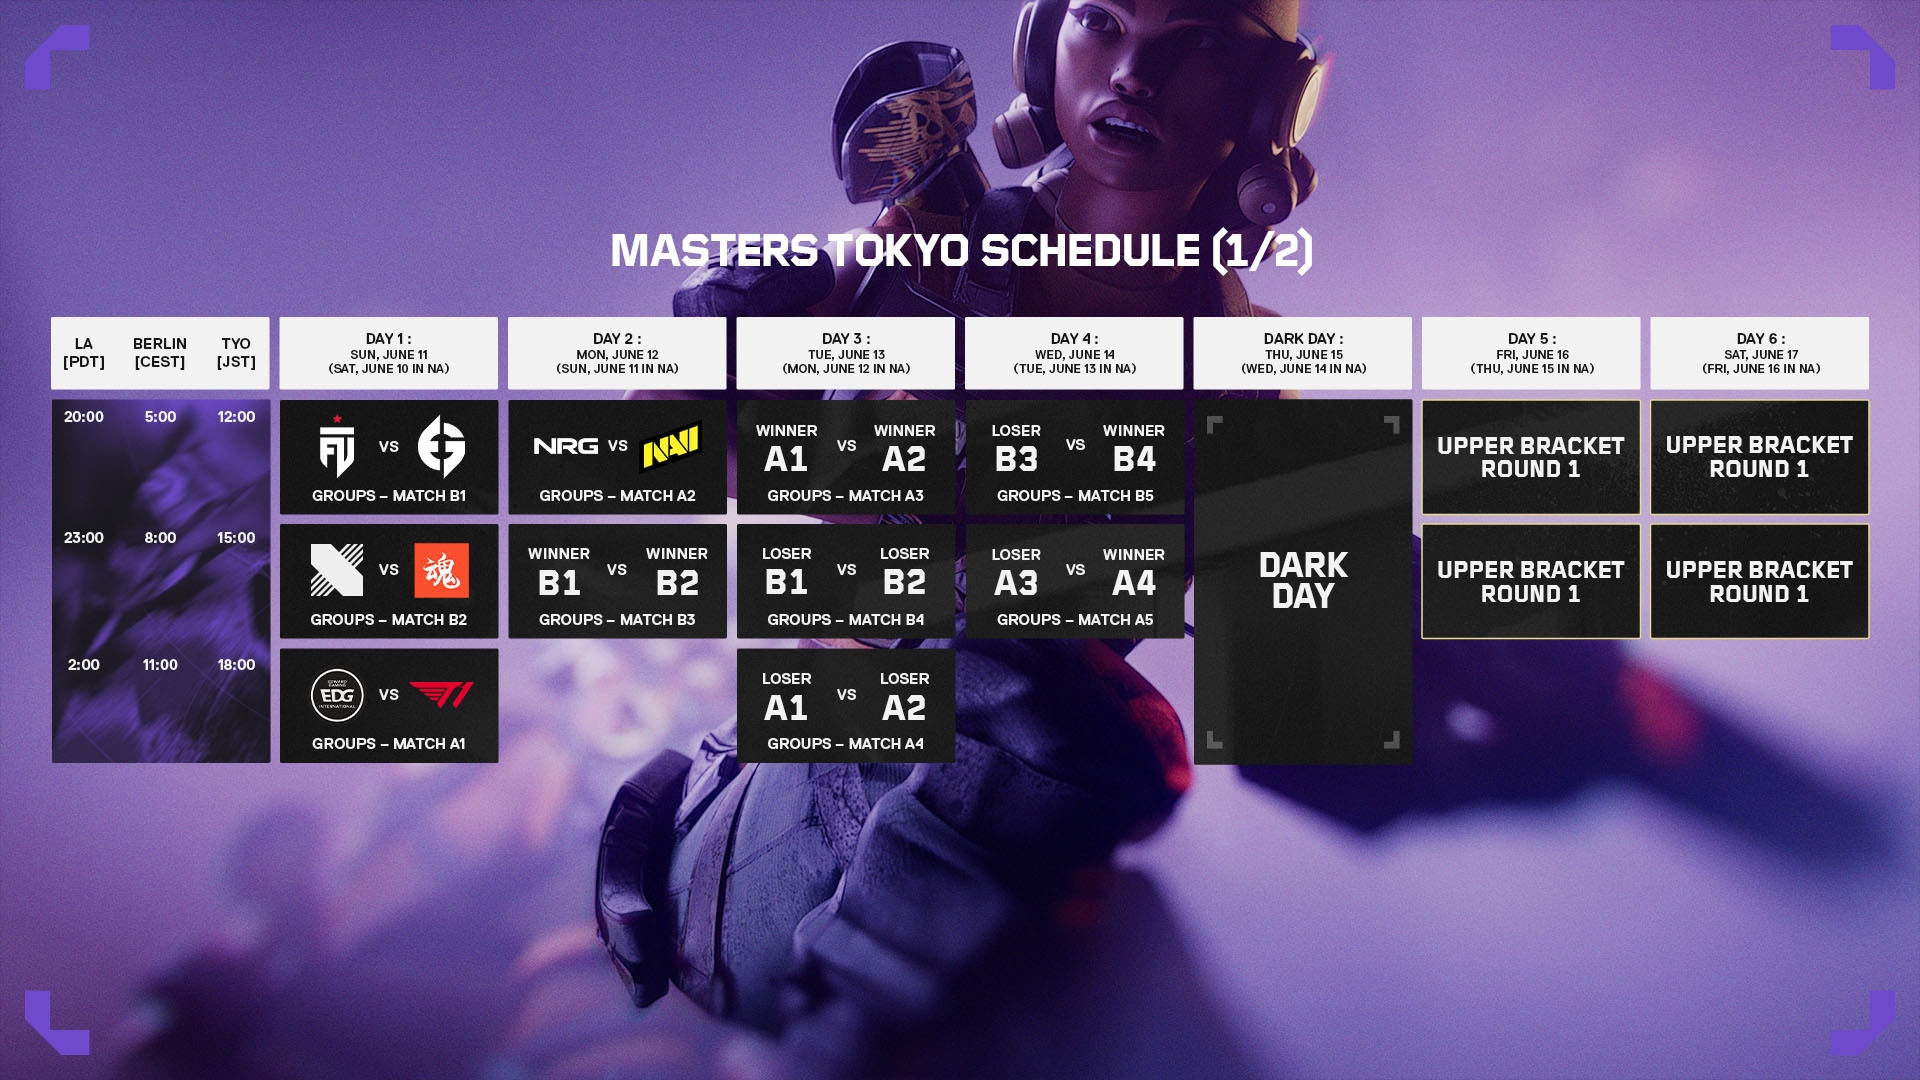 Masters Tokyo tidsplan, første del.